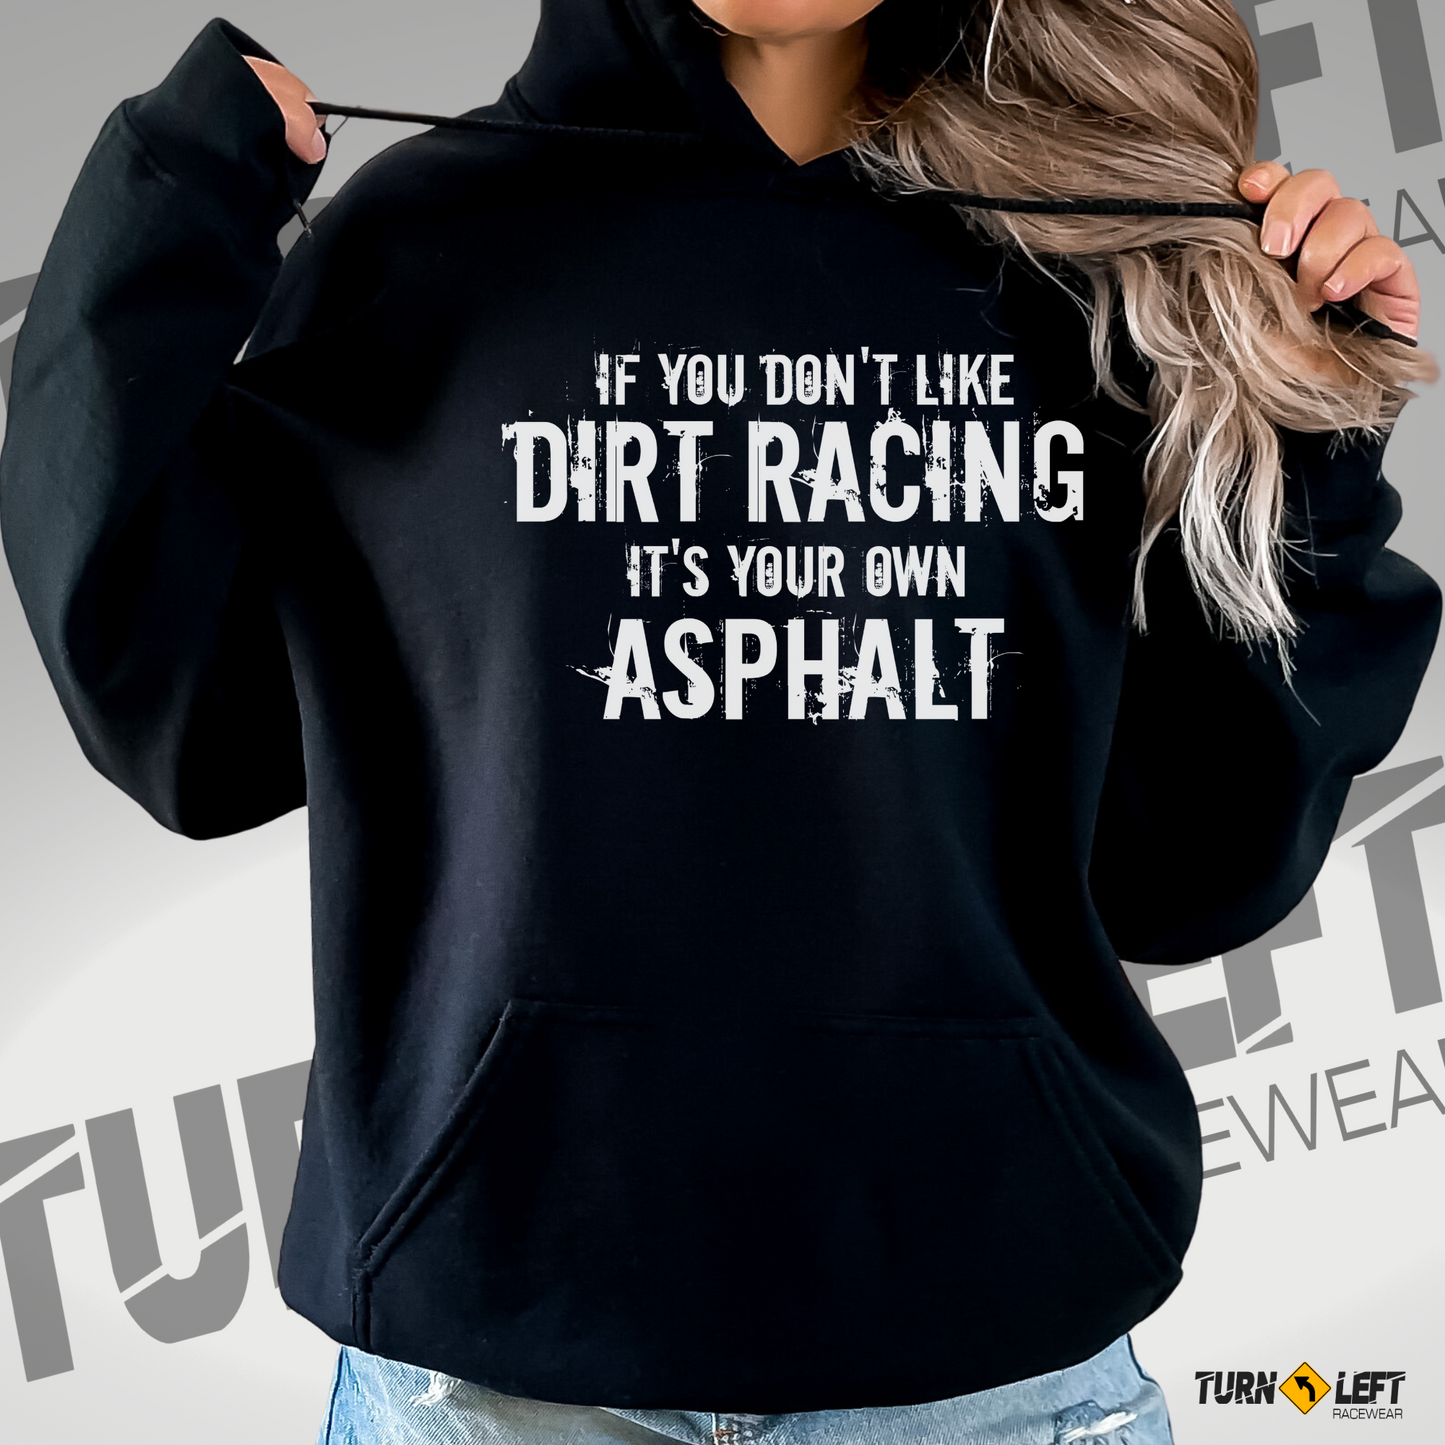 If You Don't Like Dirt Racing It's Your Own Asphalt Sweatshirts. Funny Dirt Track Racing Shirts. Women's Dirt Racing Hoodies, Stock car dirt racing shirts for women